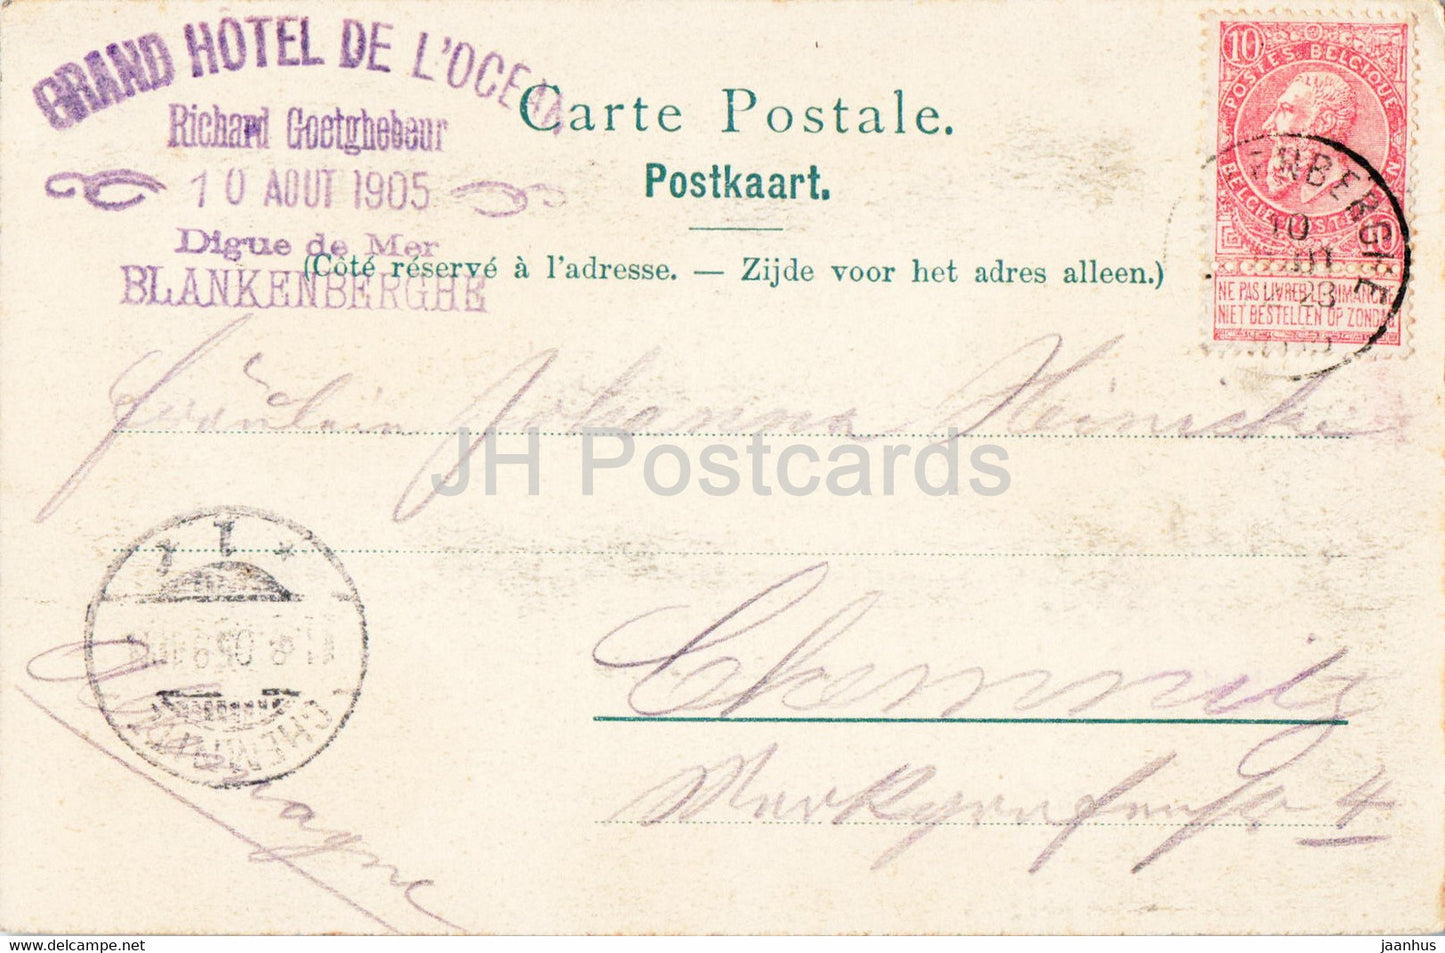 Blankenberge - Les Bains de Mer - Grand Hotel de L'Ocean - alte Postkarte - 1905 - Belgien - gebraucht